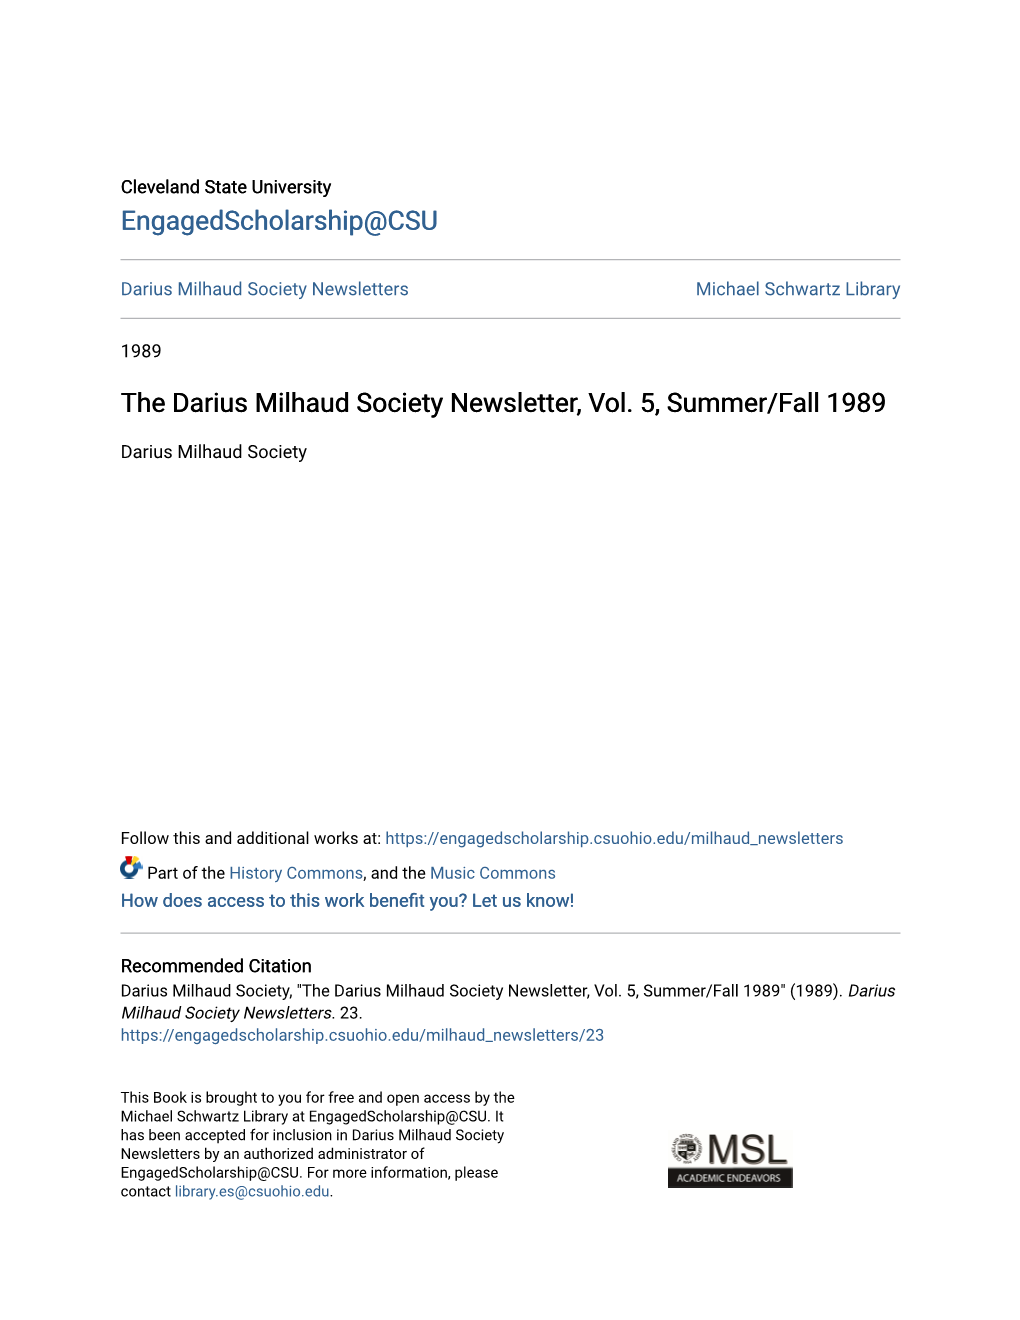 The Darius Milhaud Society Newsletter, Vol. 5, Summer/Fall 1989